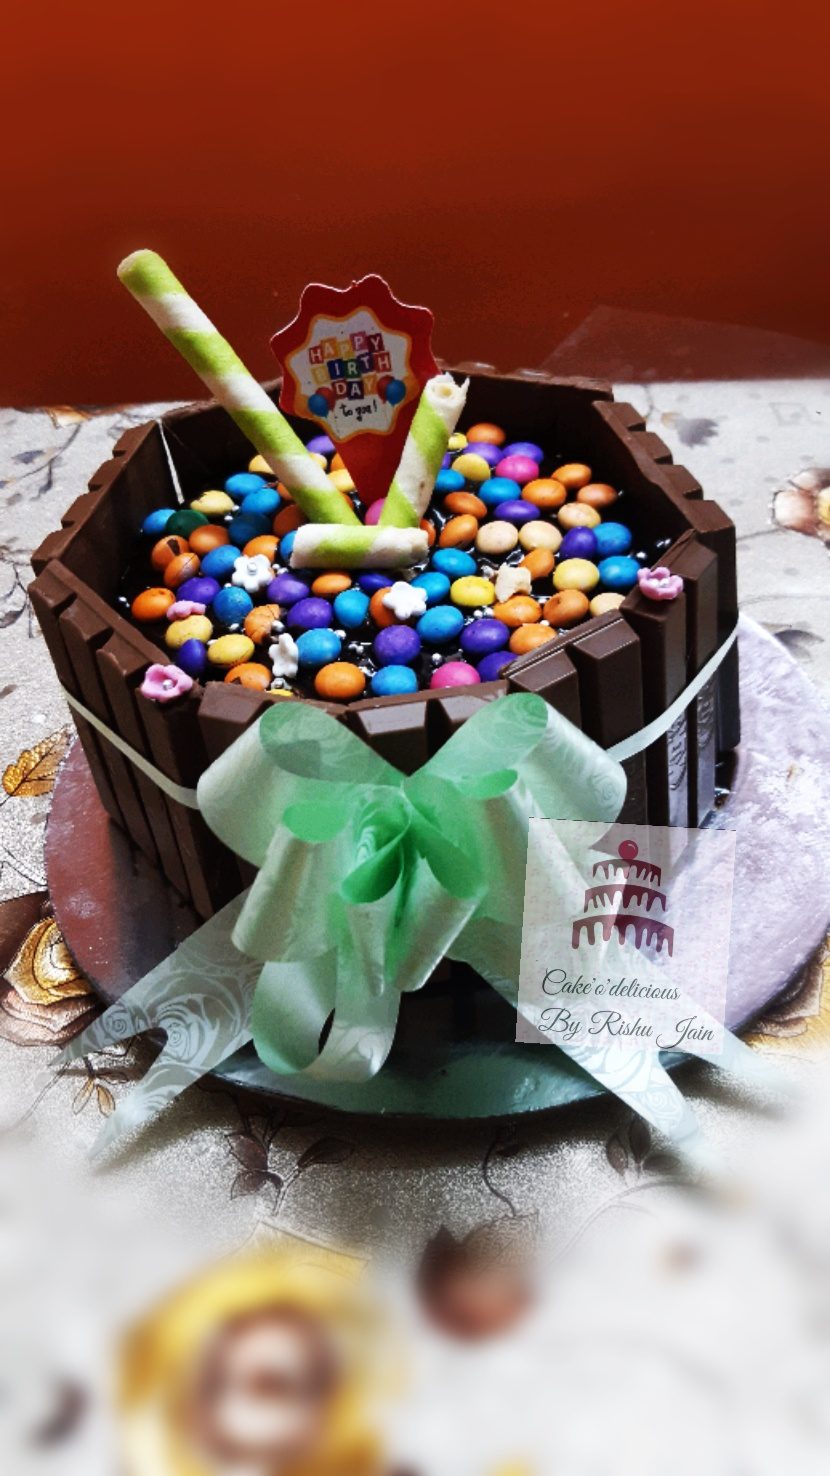 Birthday party cakes/Theme cakes Designs, Images, Price Near Me